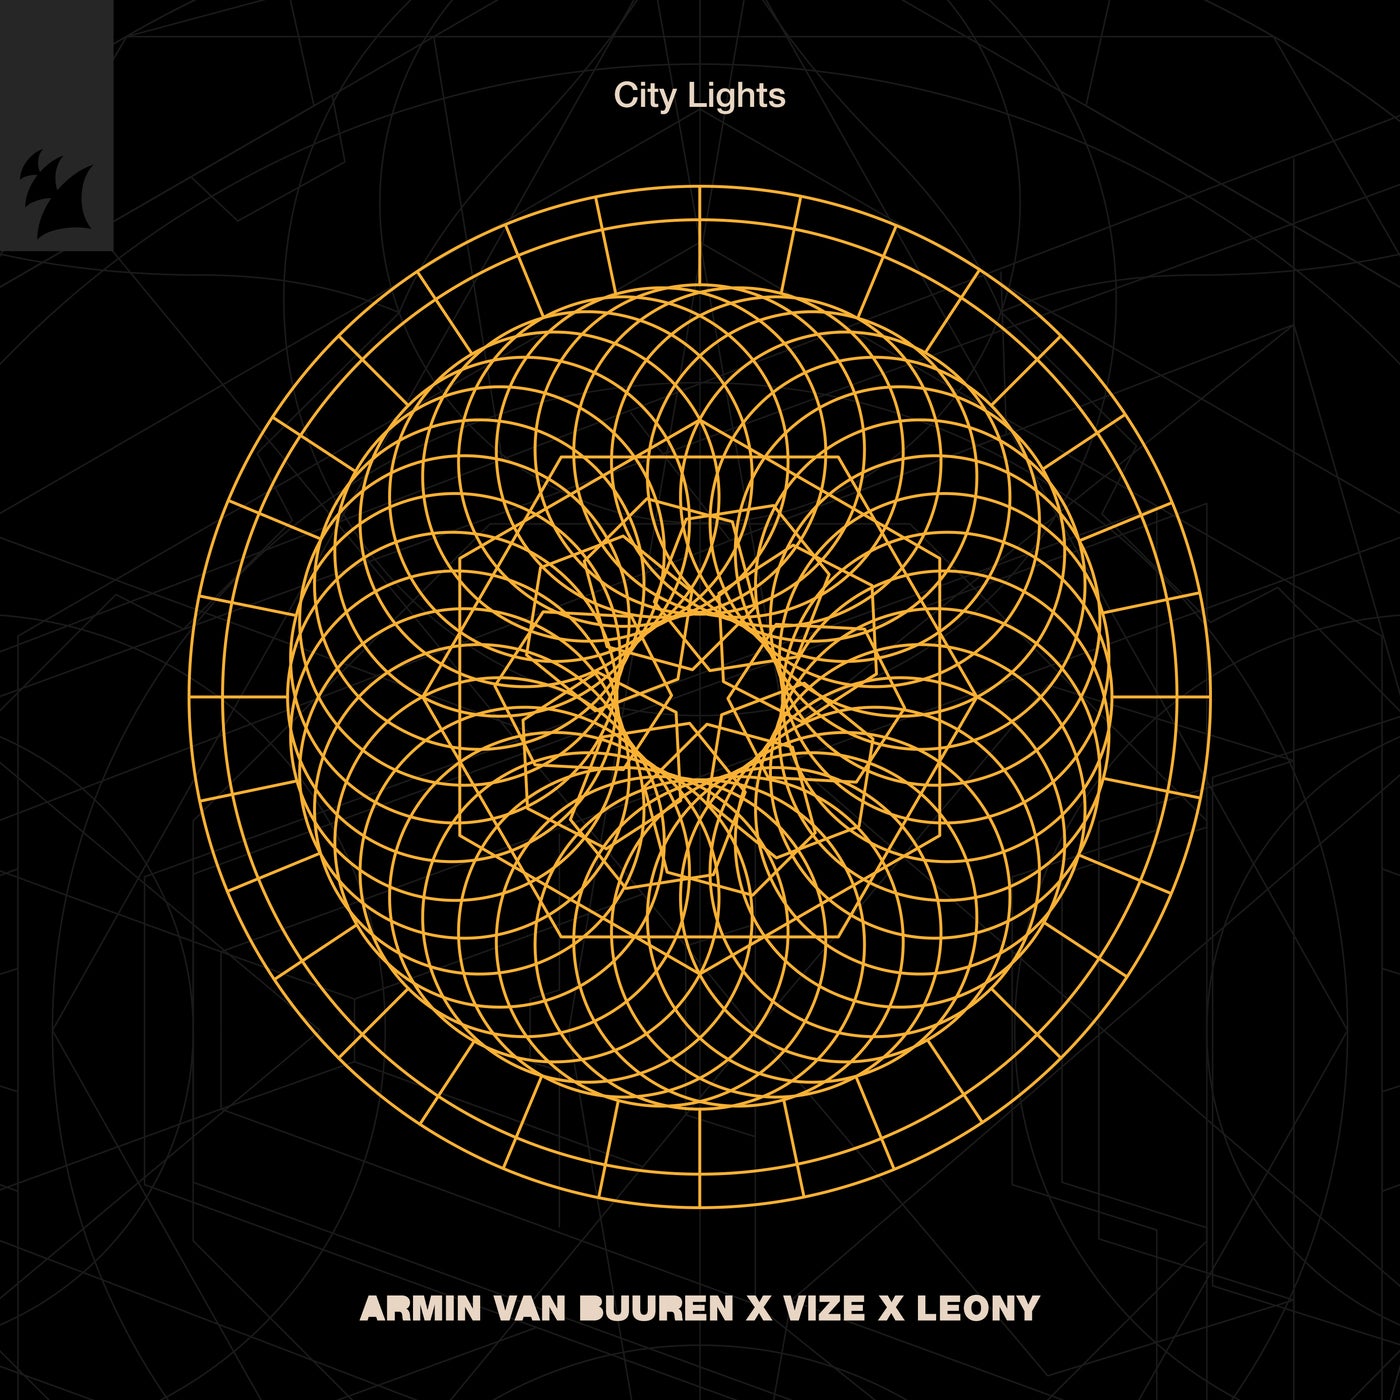 image cover: Armin van Buuren, Vize, Leony - City Lights on Armada Music